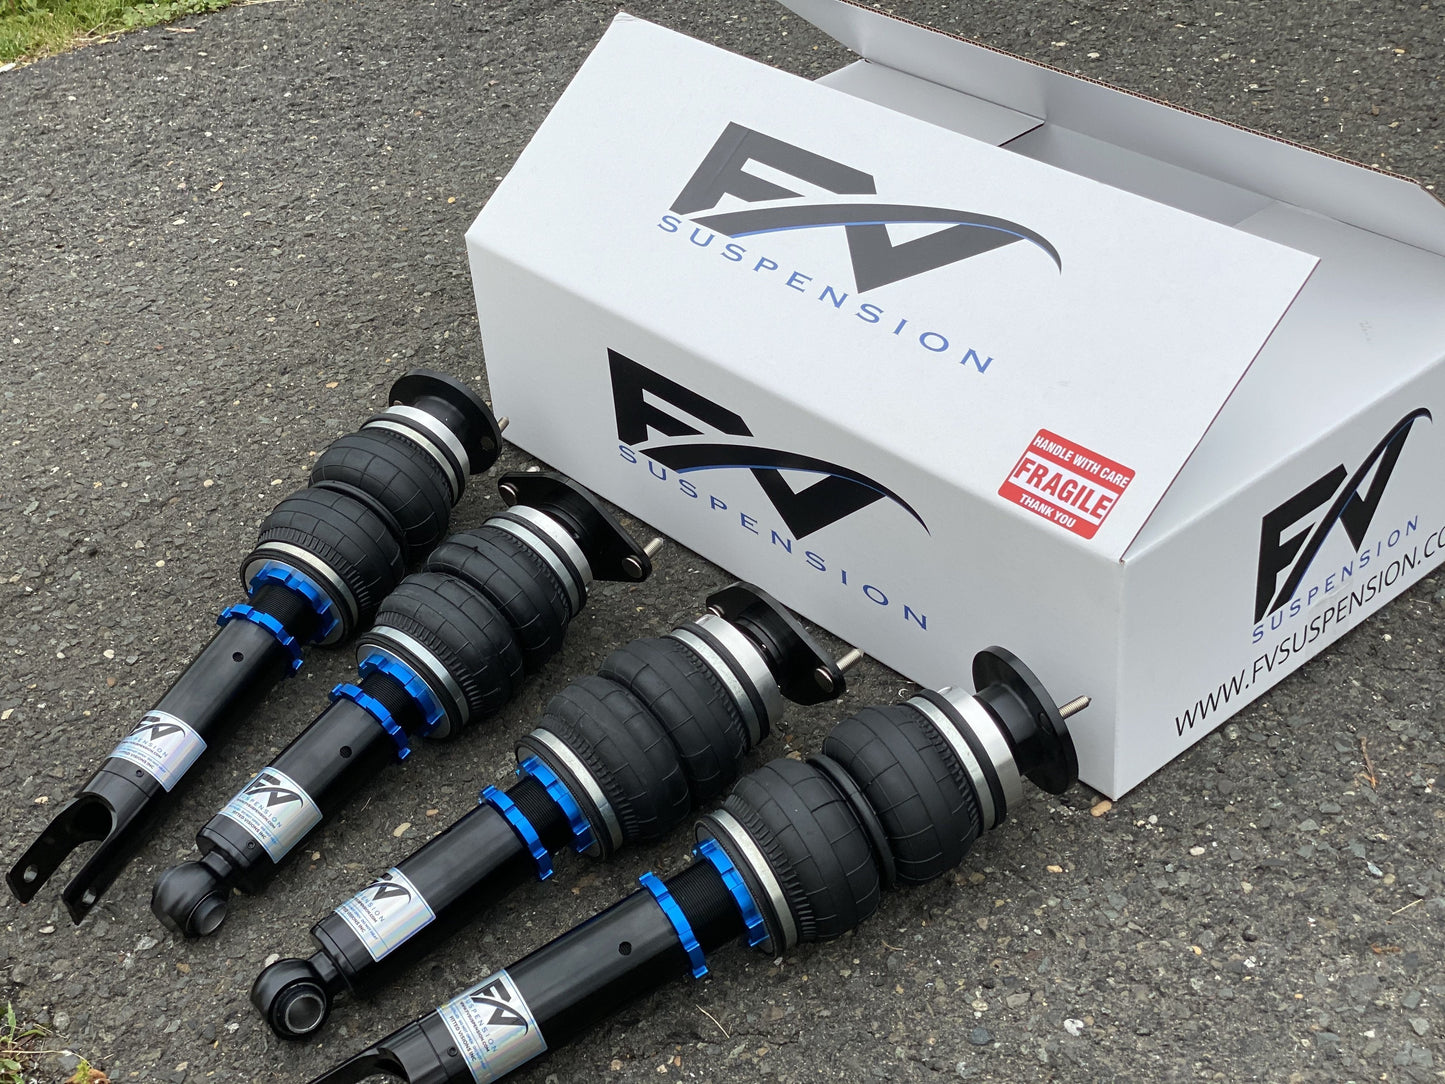 FV Suspension Tier 1 Budget kit Complete Air Ride kit for 11-14 BMW 1 Series - FVALFullkit81